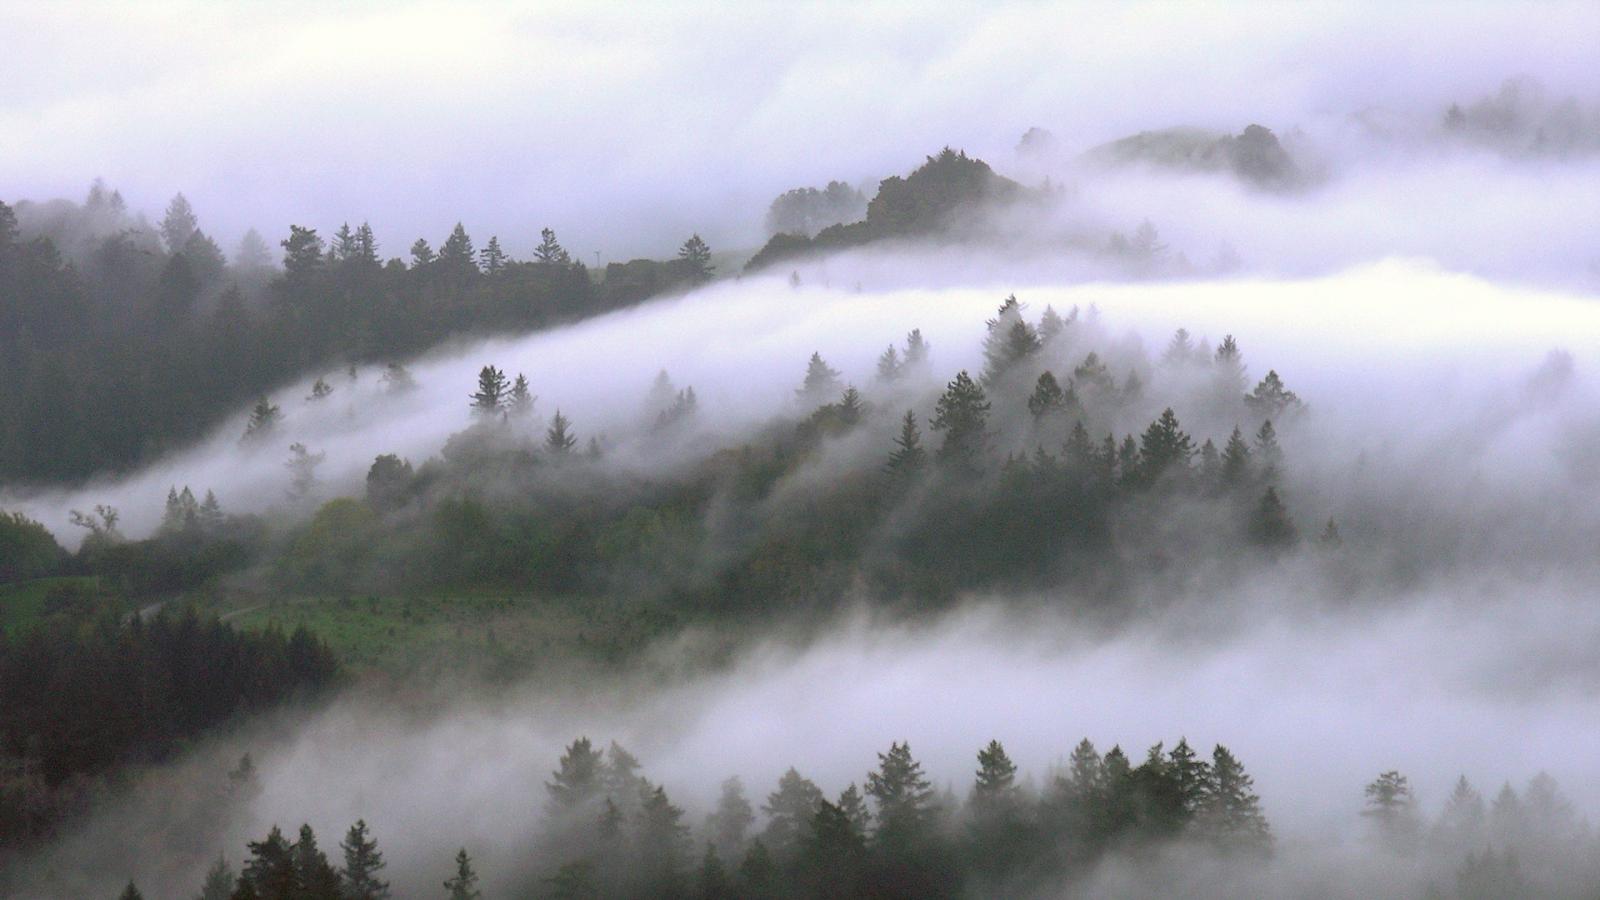 fog rolls through a forest of trees